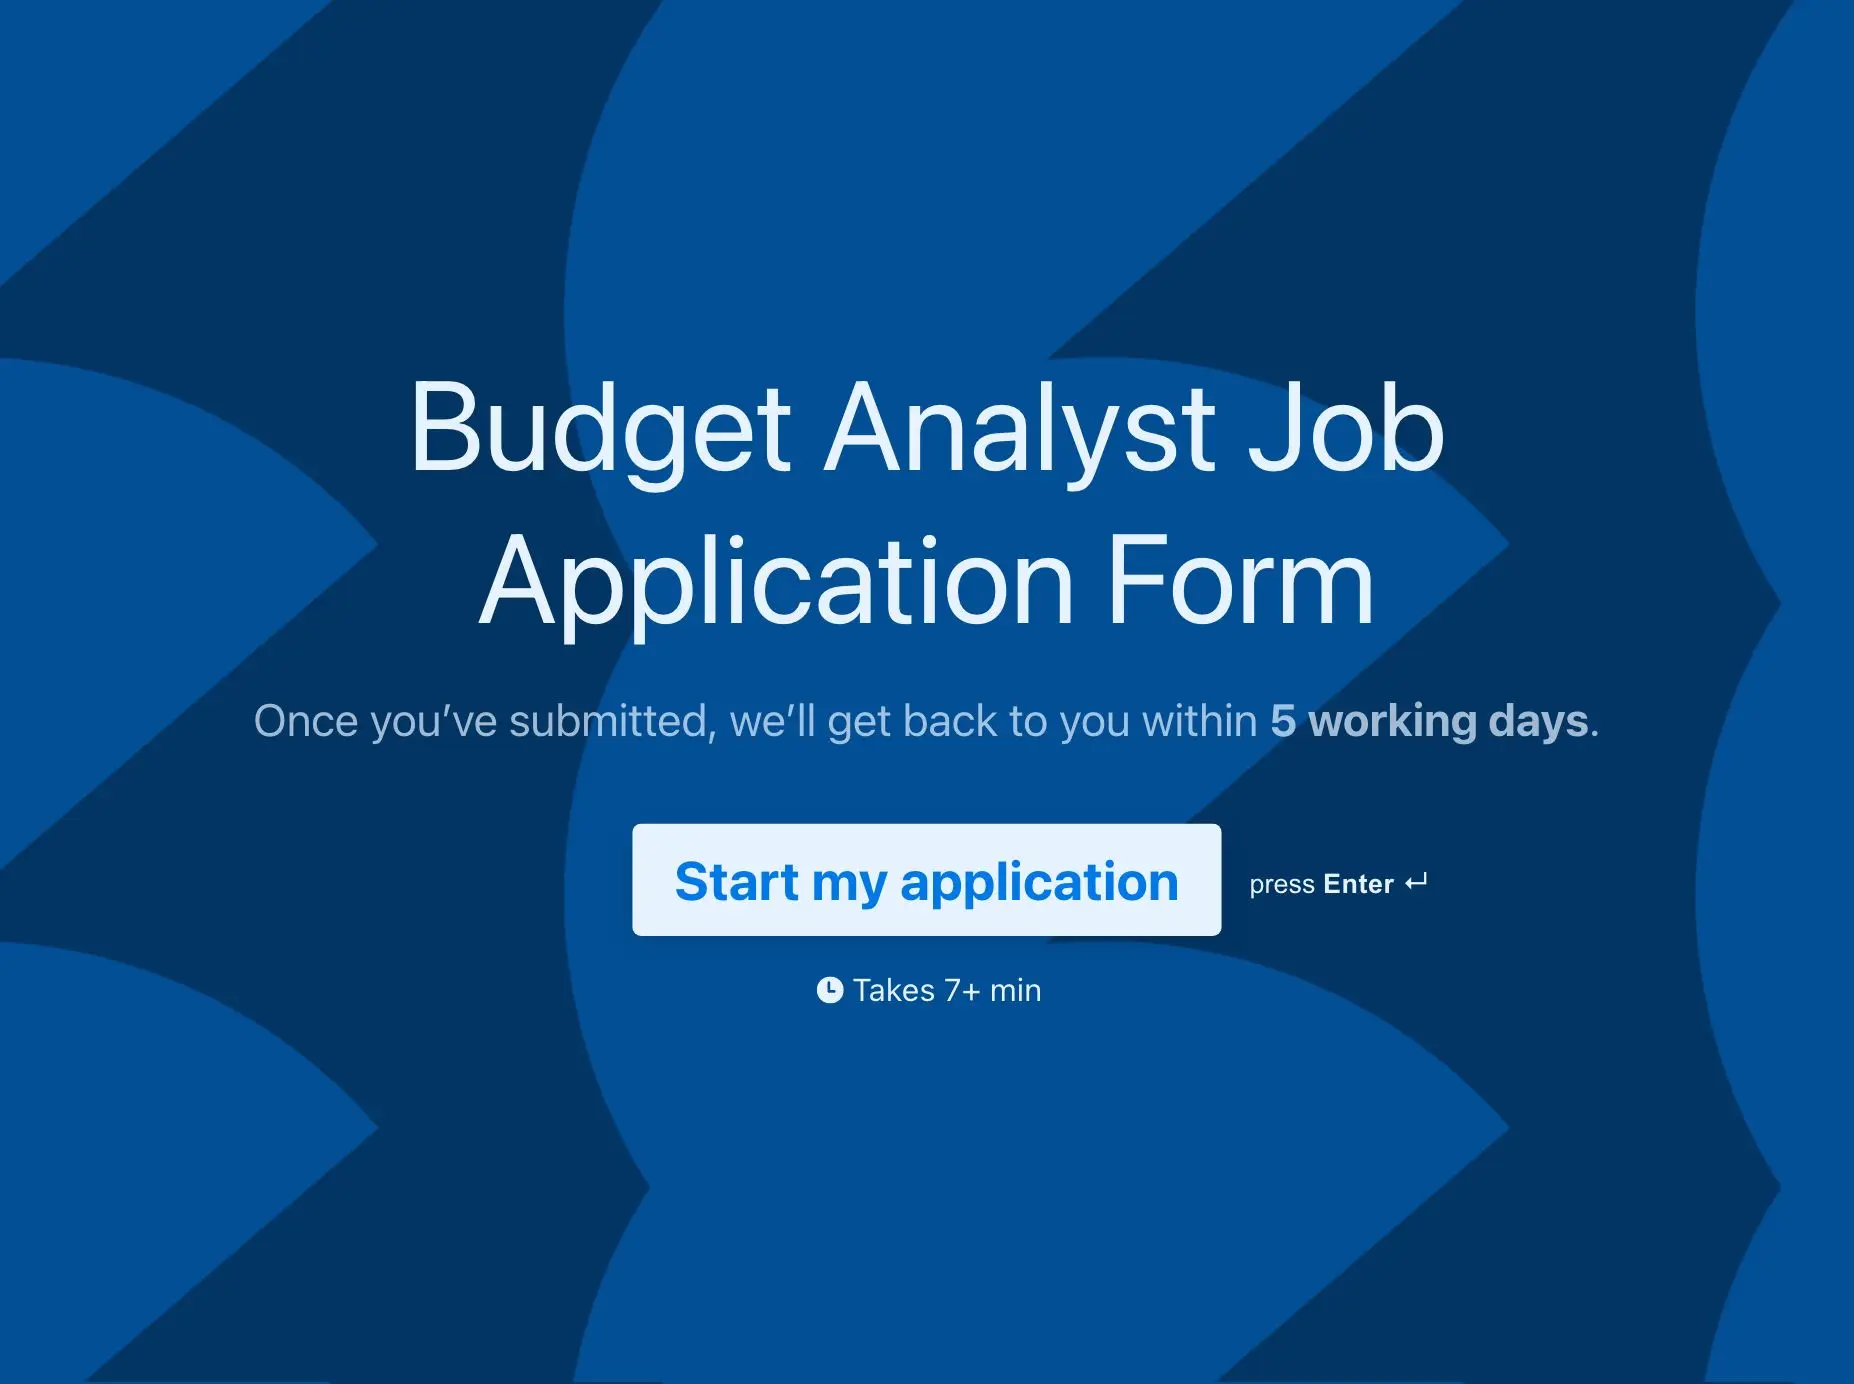 Budget Analyst Job Application Form Template Hero